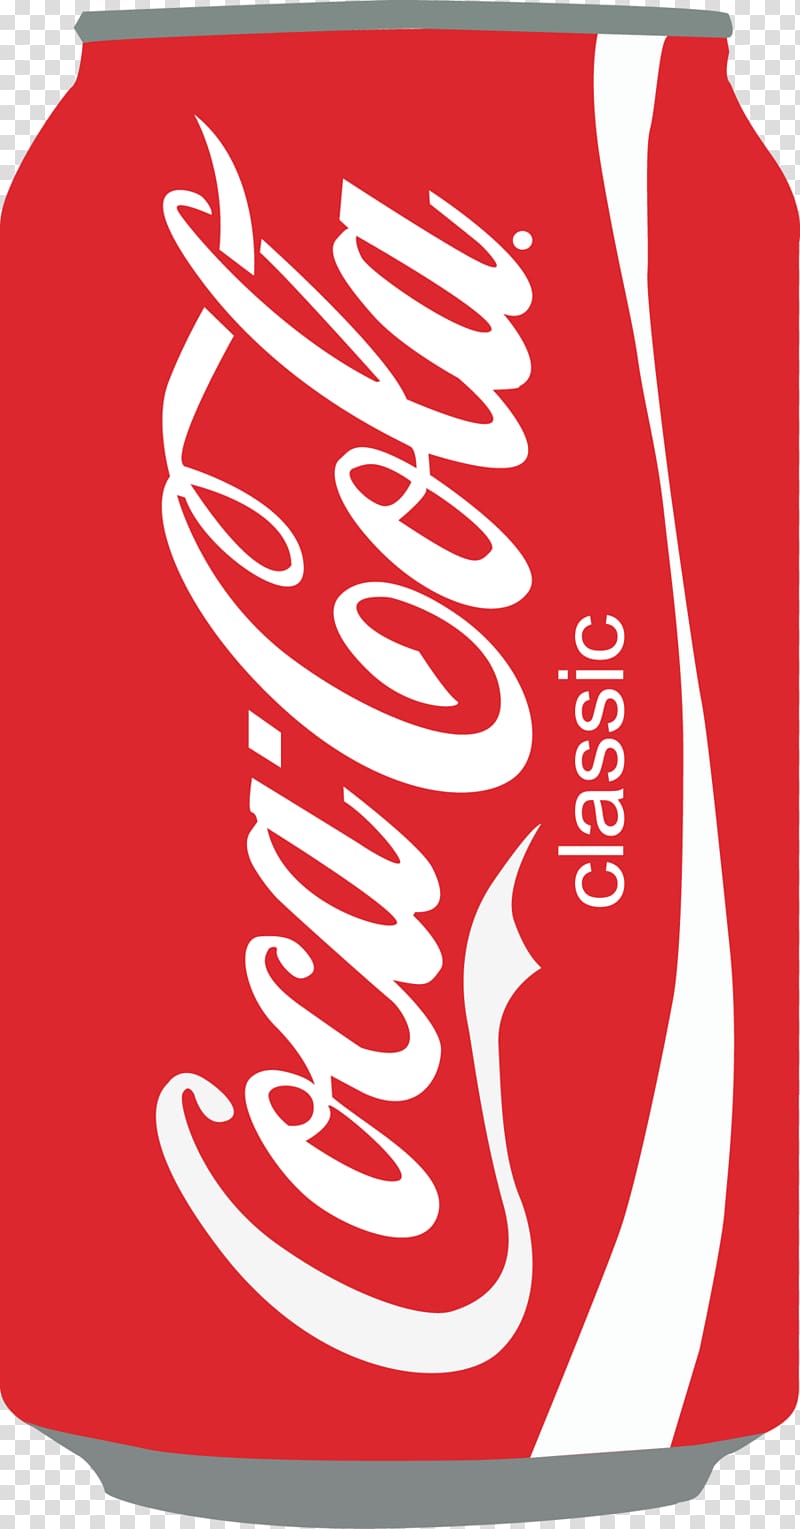 Coca-Cola can illustration, Coca-Cola Fizzy Drinks Diet Coke Pepsi, SODA transparent background PNG clipart